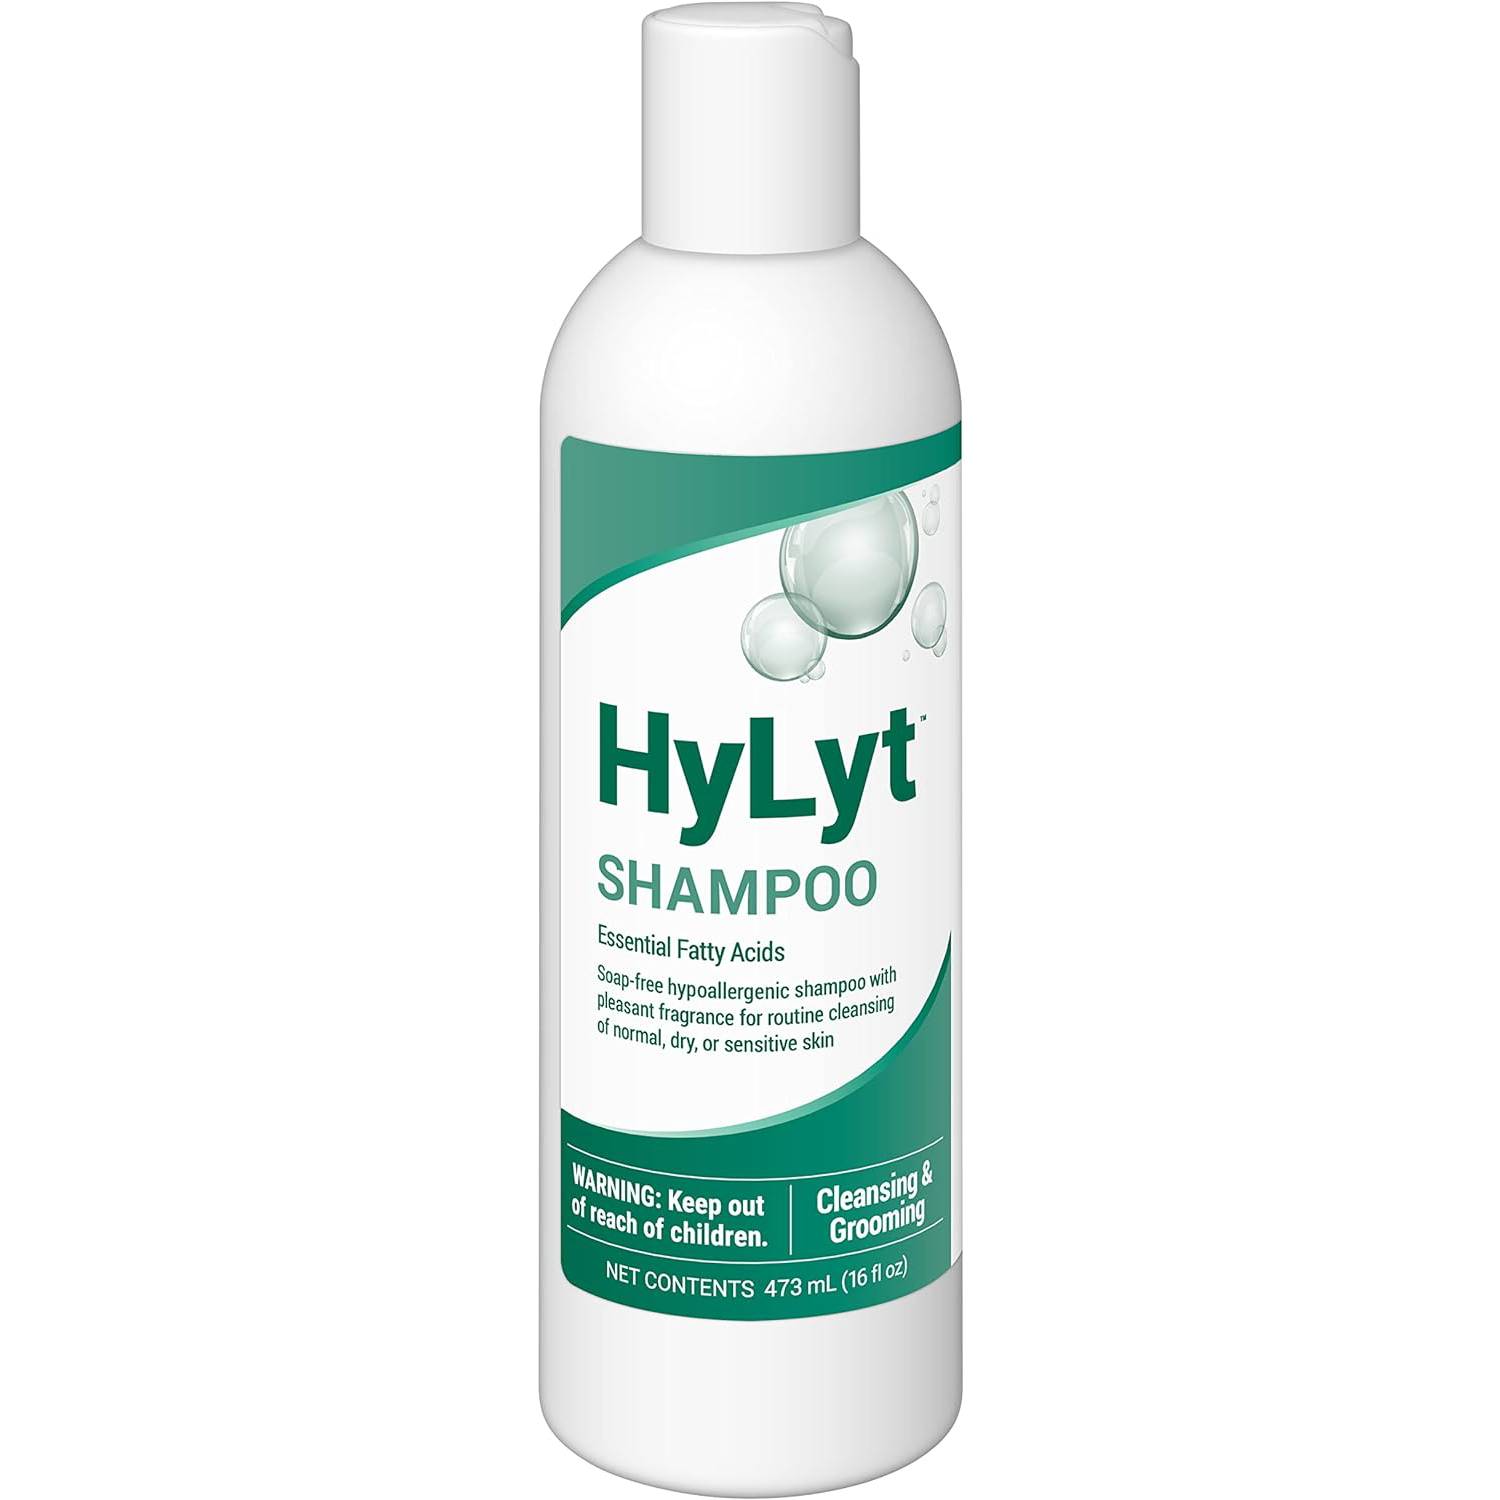 HyLyt Shampoo, soap-free cleansing and moisturizing shampoo